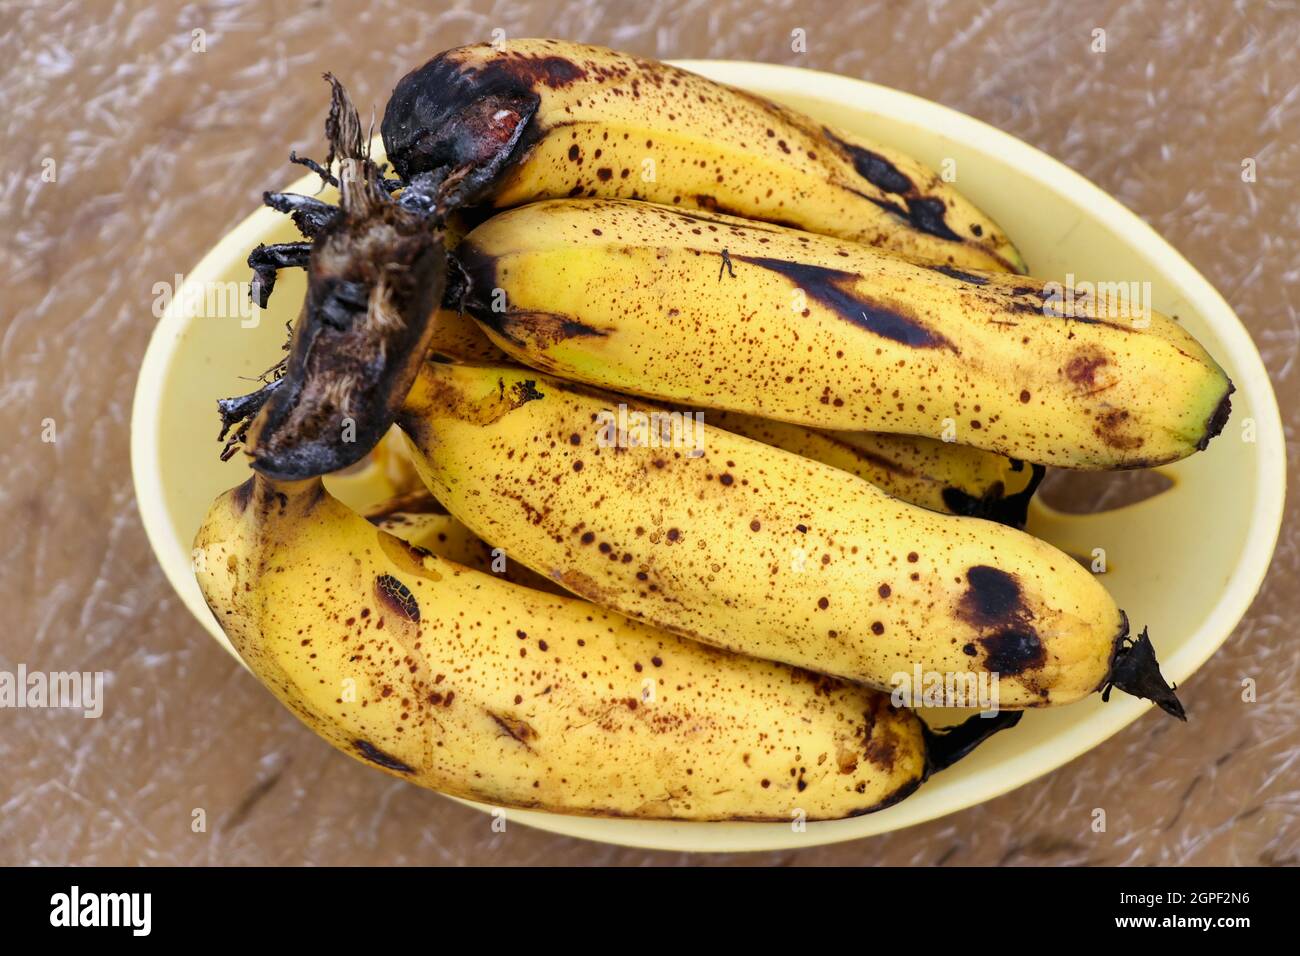 Ripe yellow bananas fruits, bunch of ripe bananas with dark spots Stock Photo